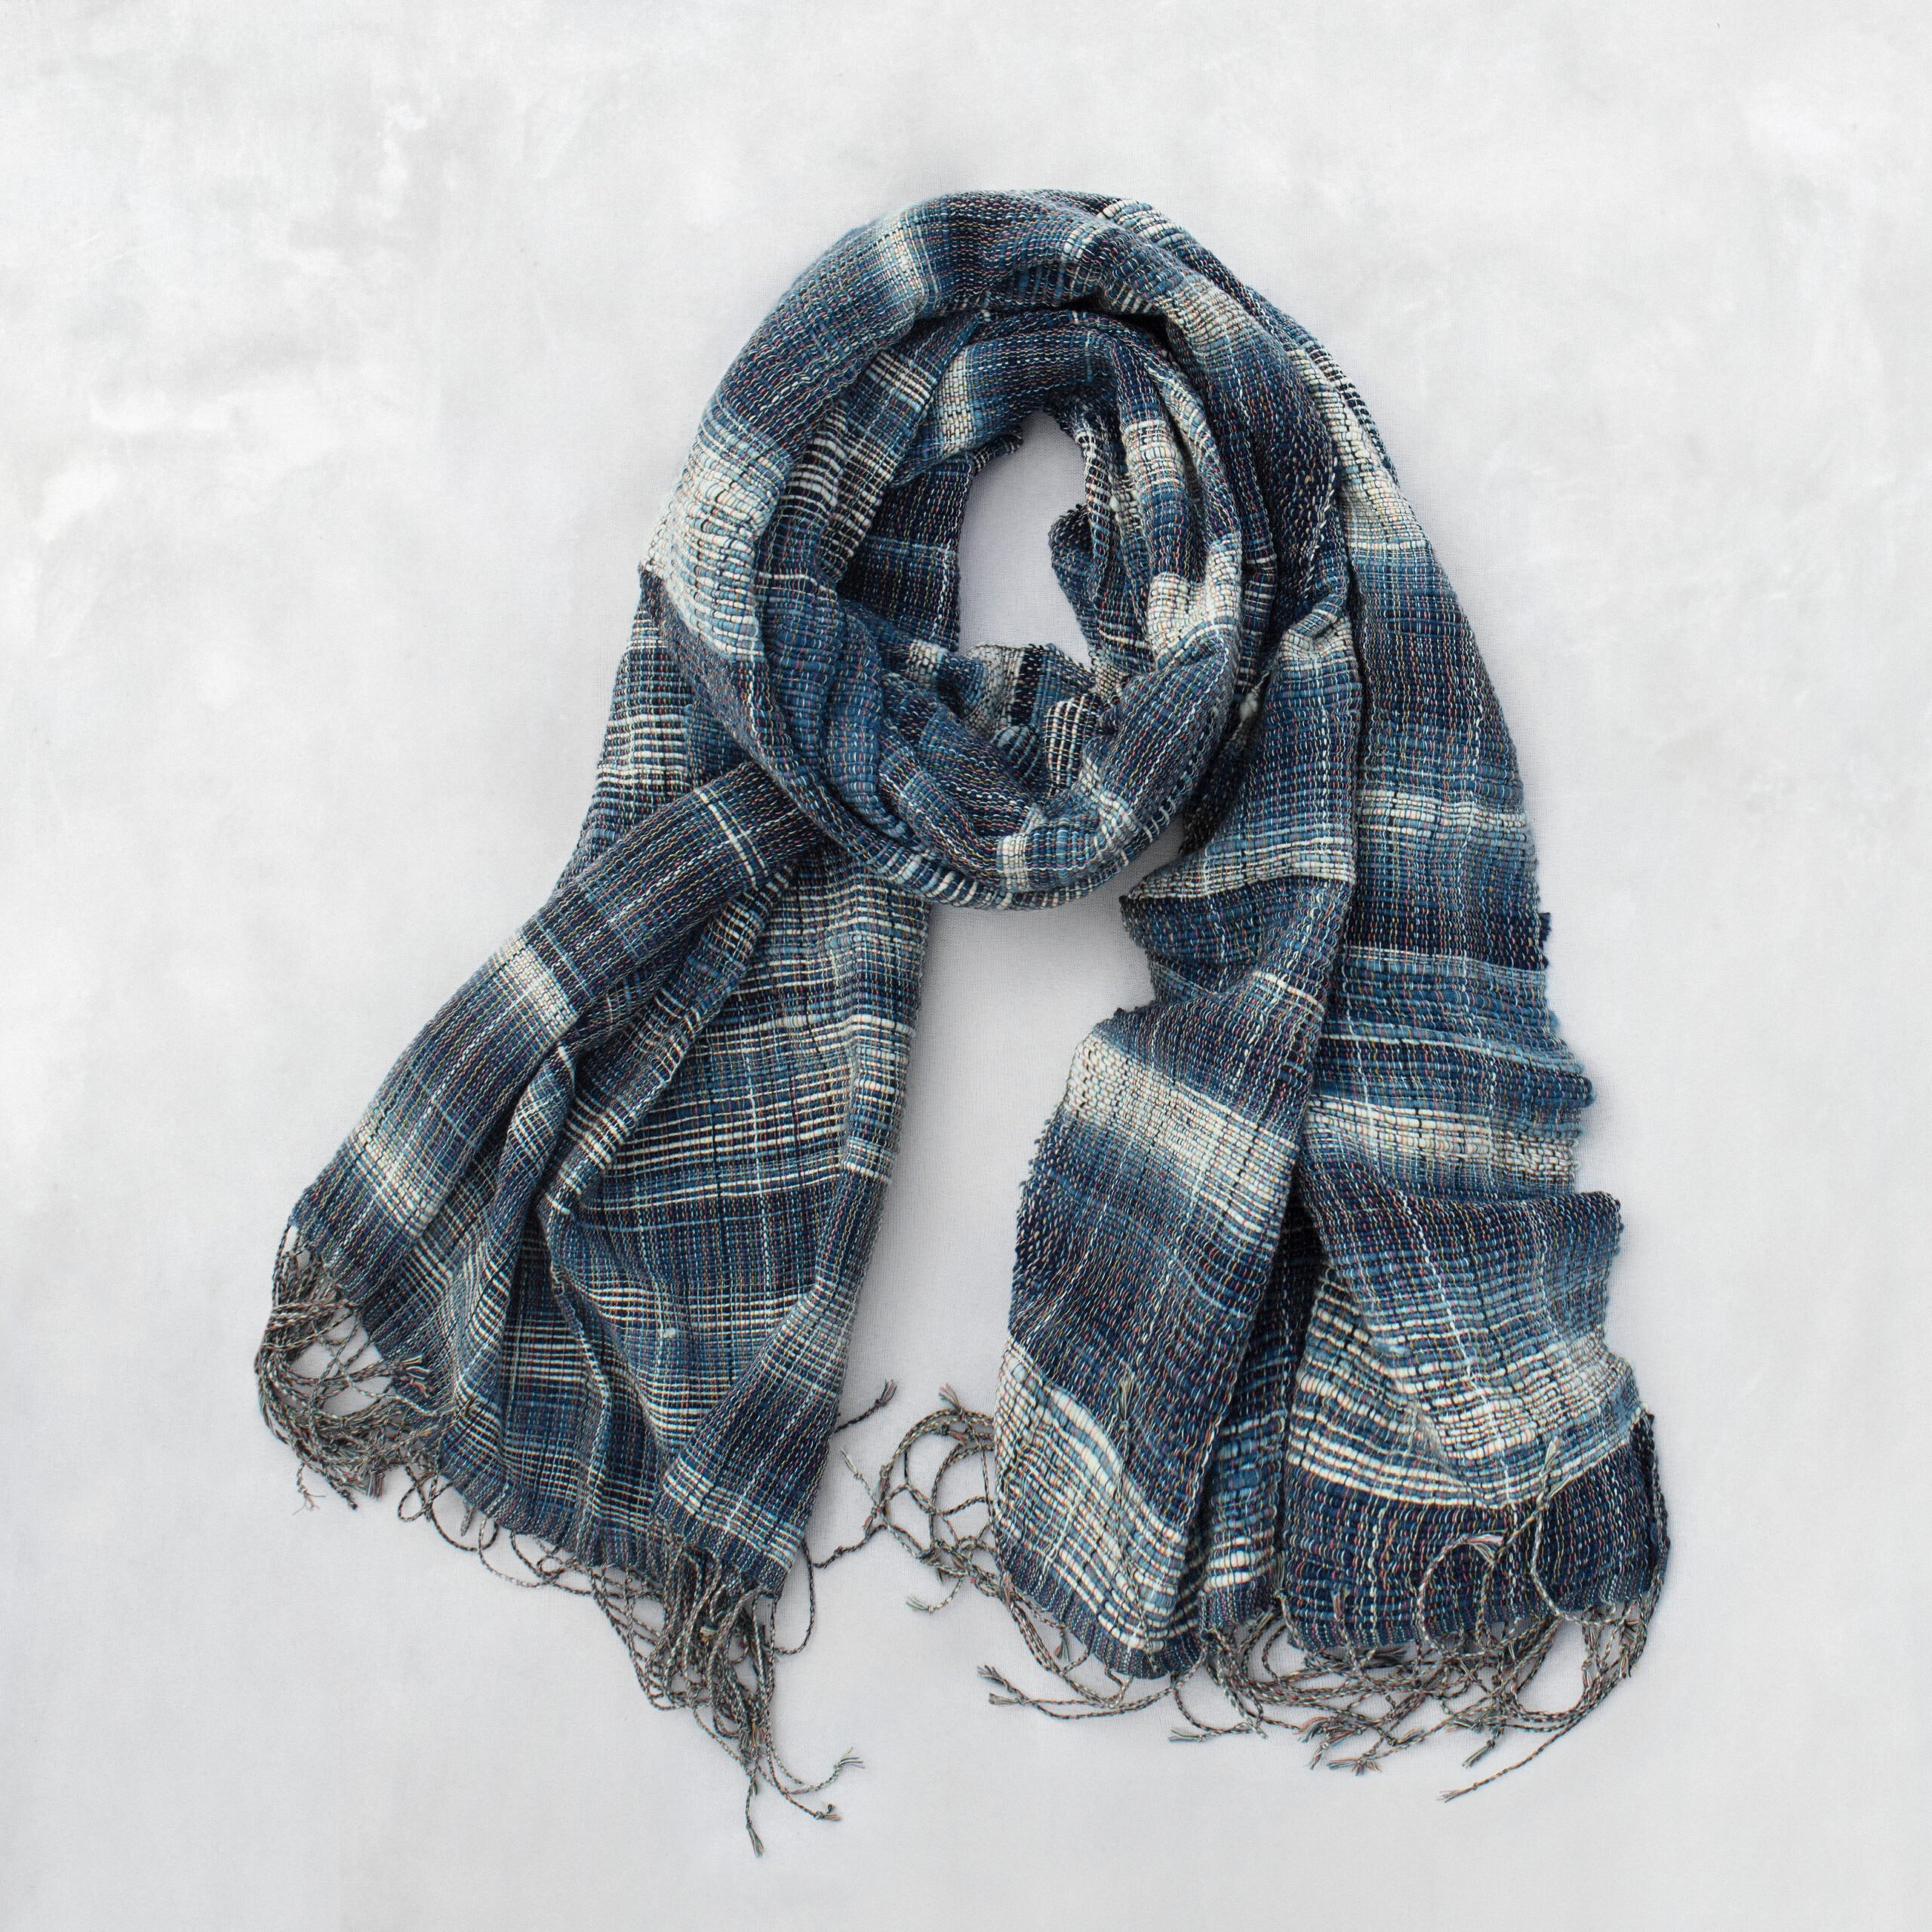 Artisan handwoven scarf handloom